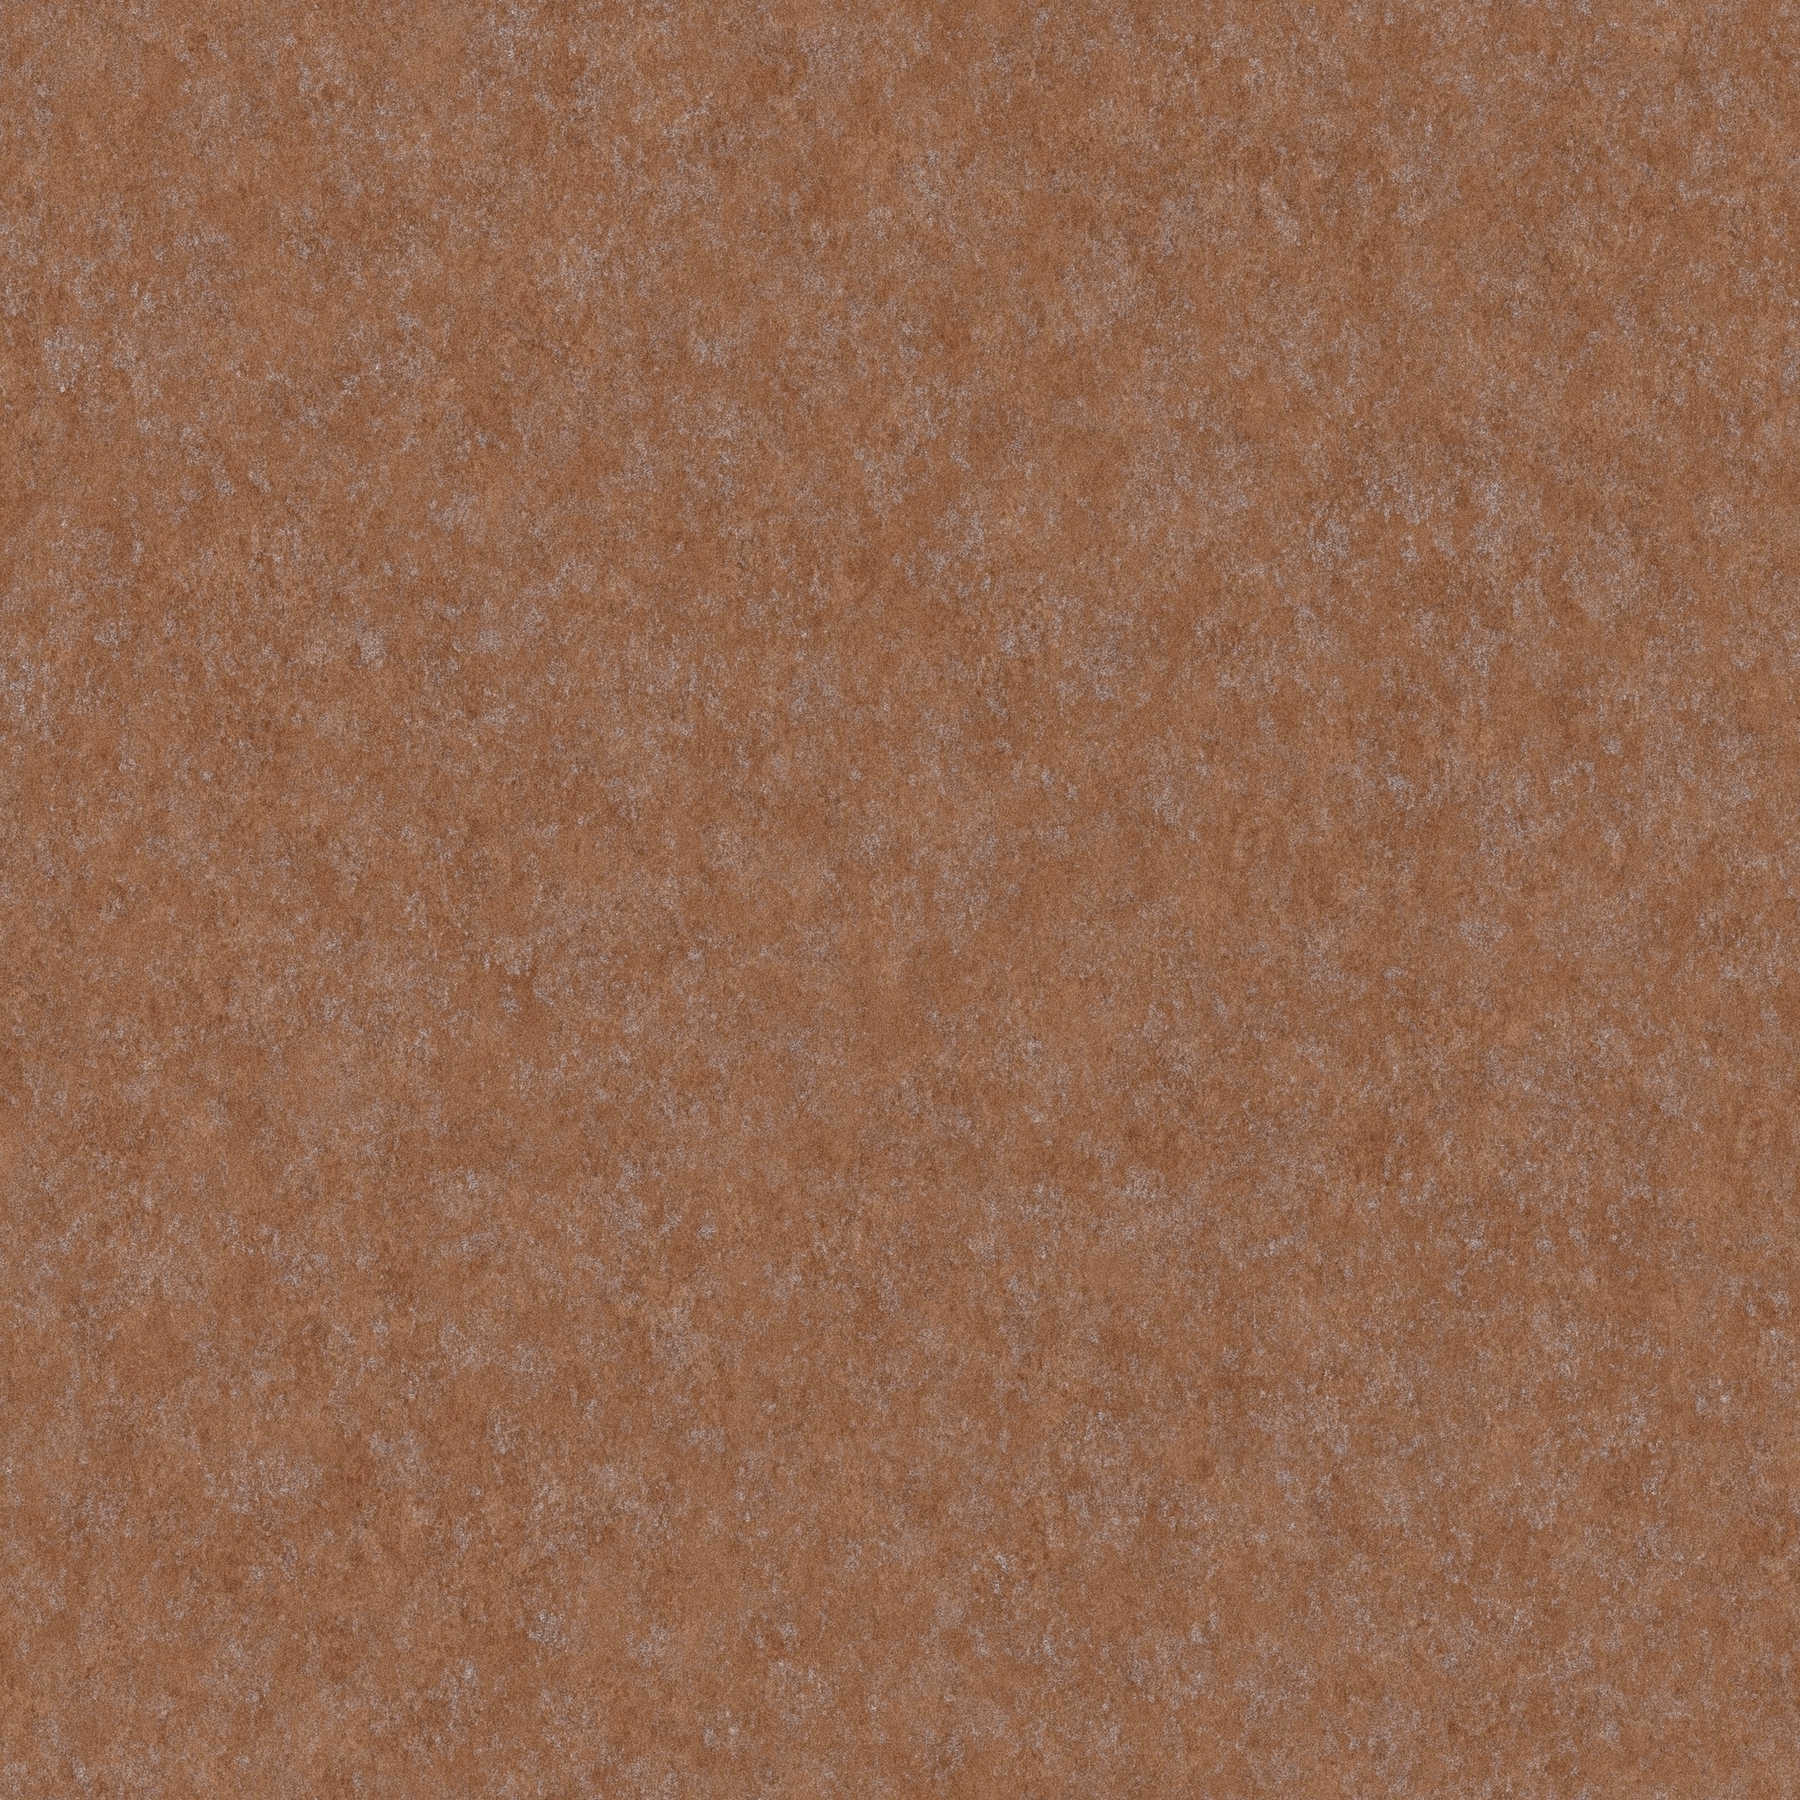         Non-woven wallpaper industrial design & rust structure - brown, grey
    